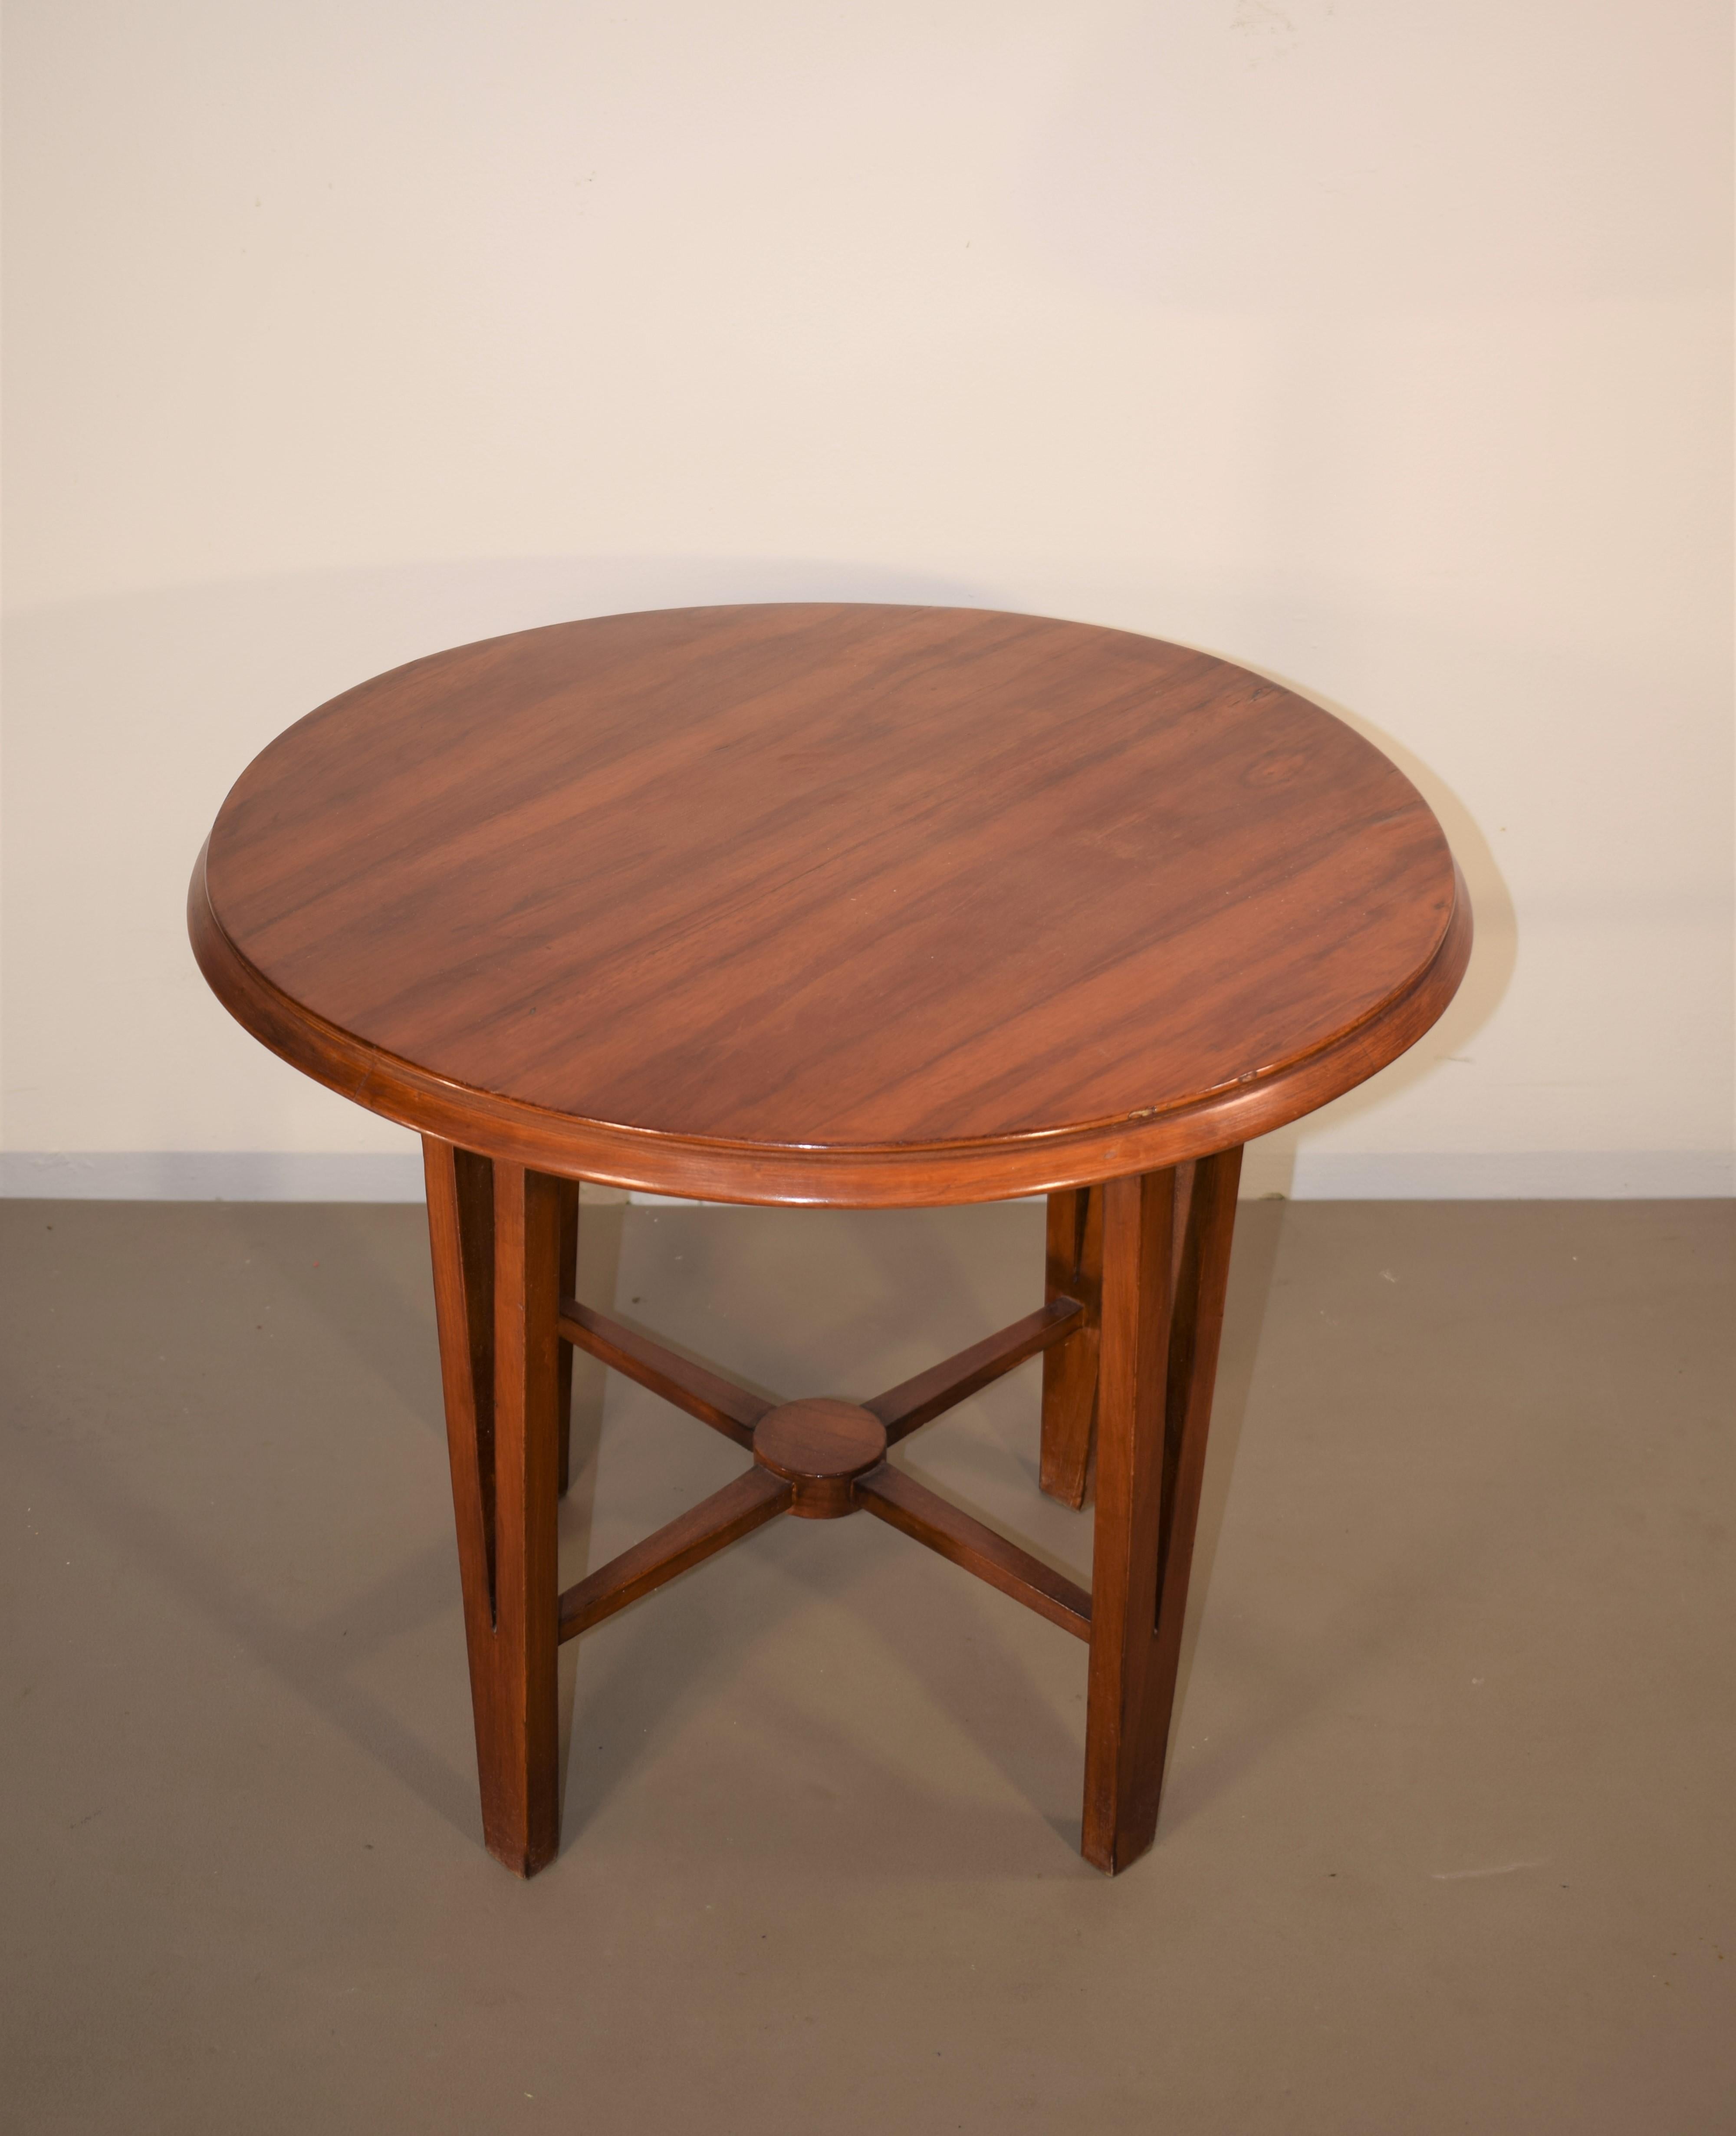 Italian round coffee table, 1940s.

Dimensions: H= 51 cm; D= 61 cm.